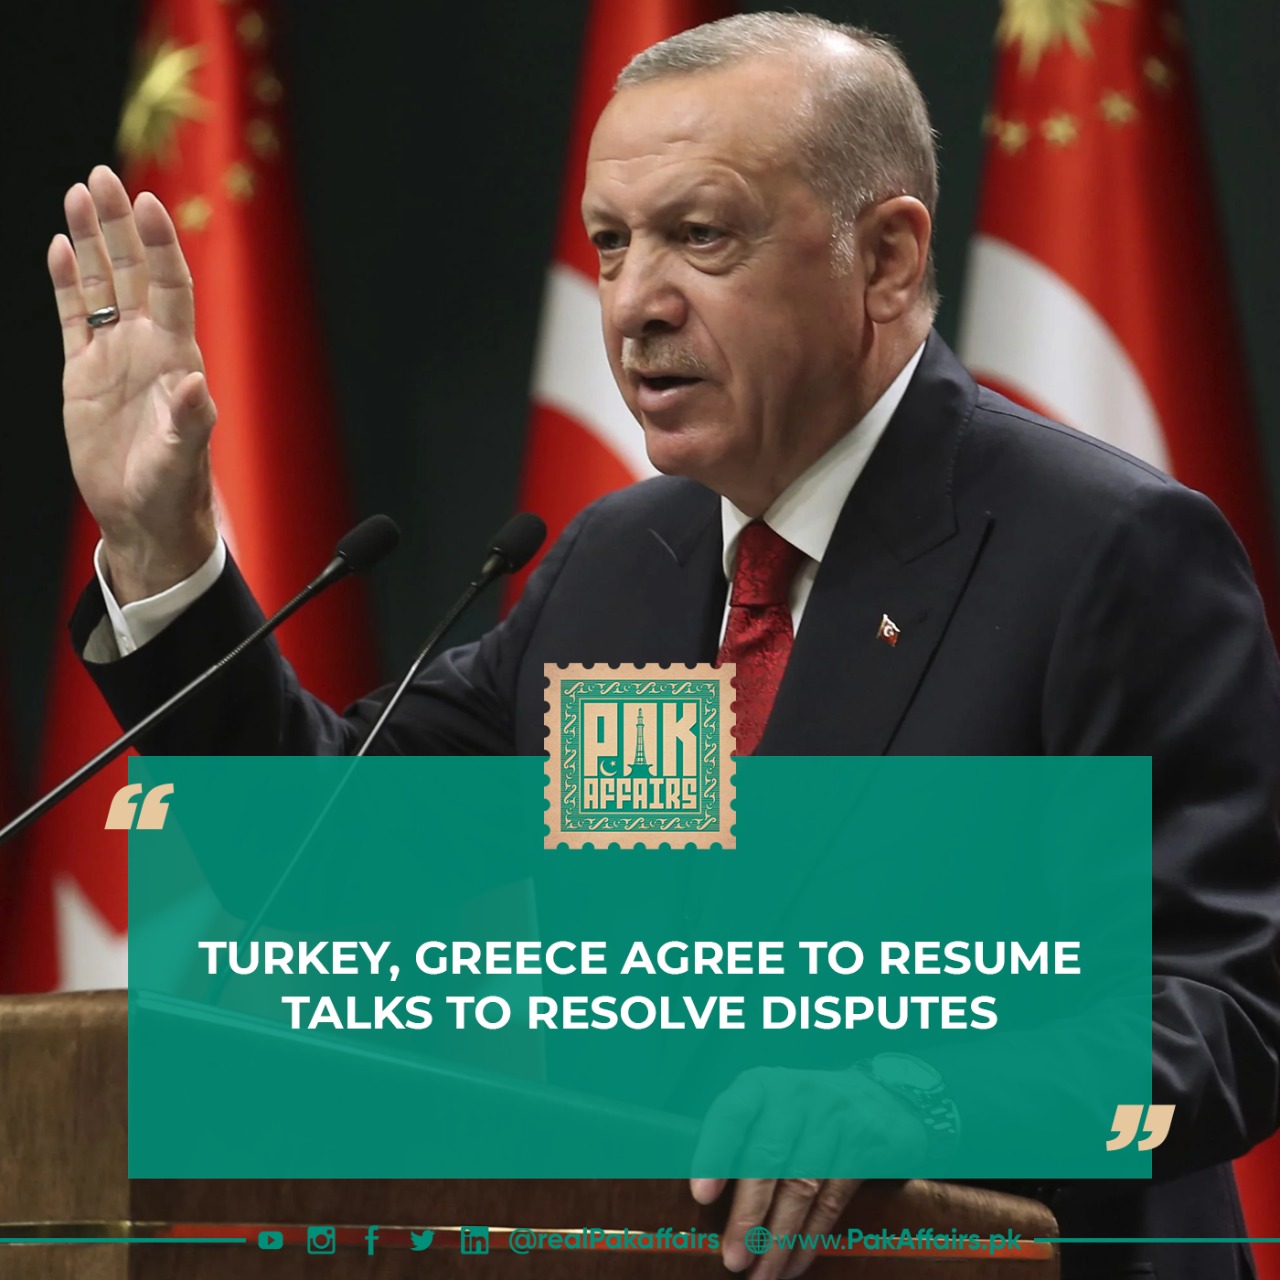 Turkey, Greece agree to resume talks to resolve disputes